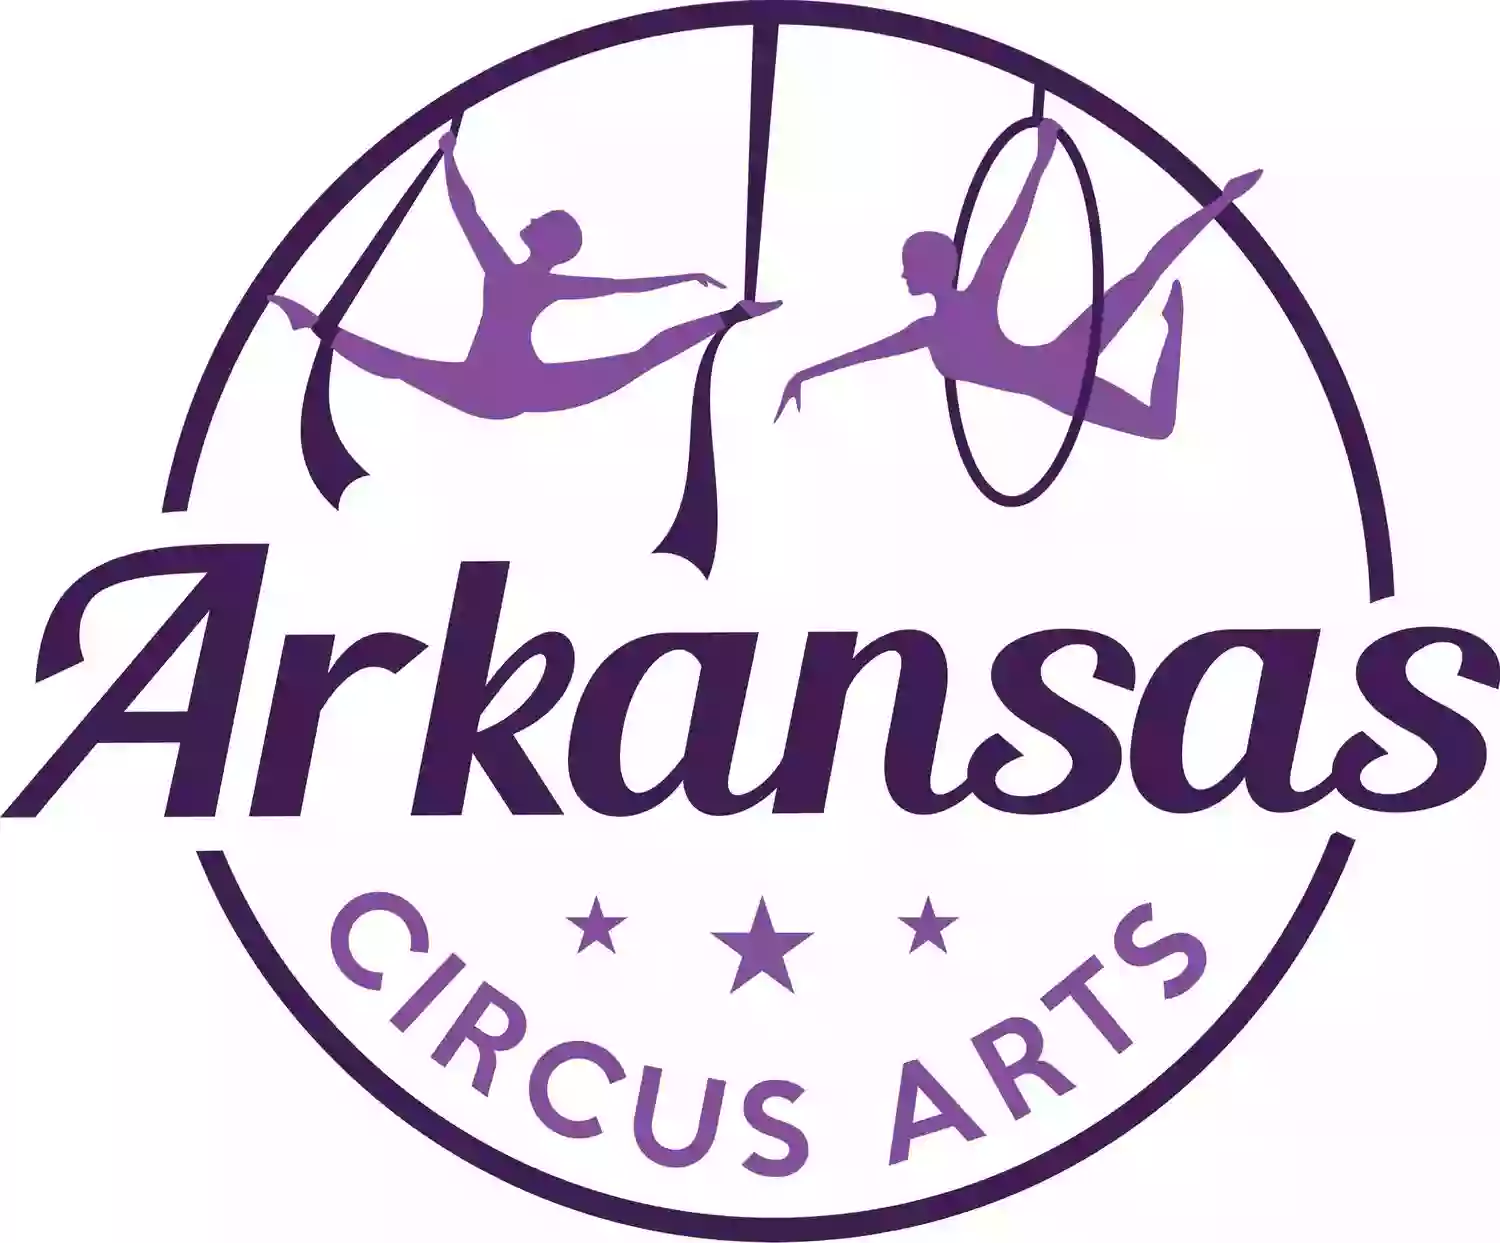 Arkansas Circus Arts